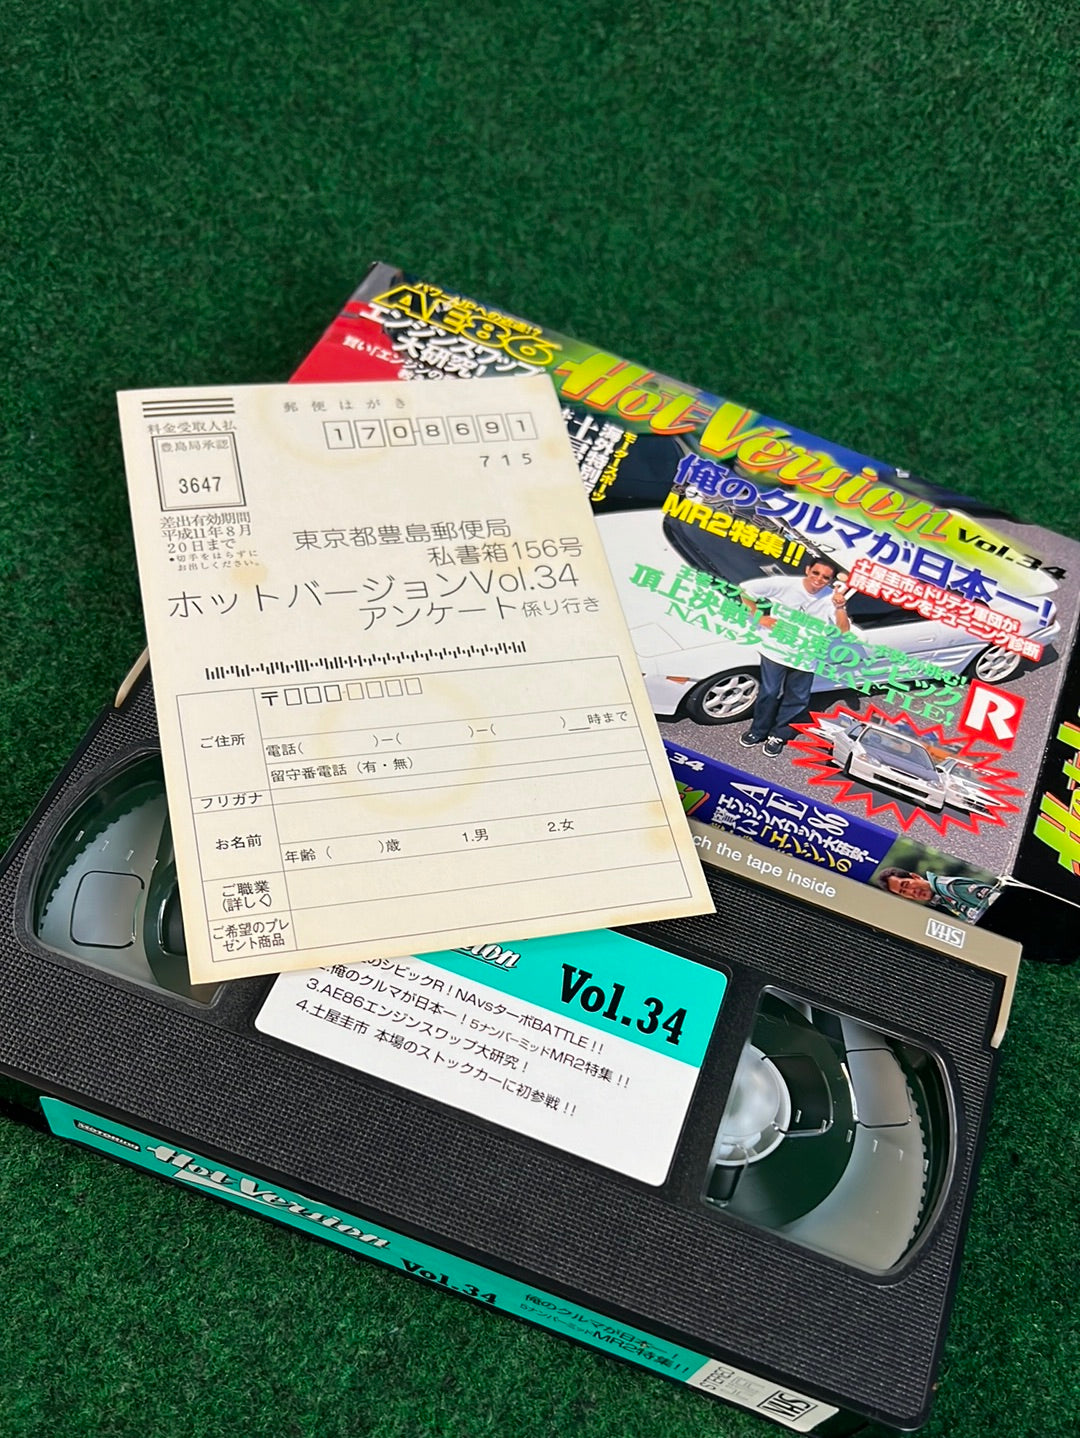 Hot Version VHS - Vol. 34